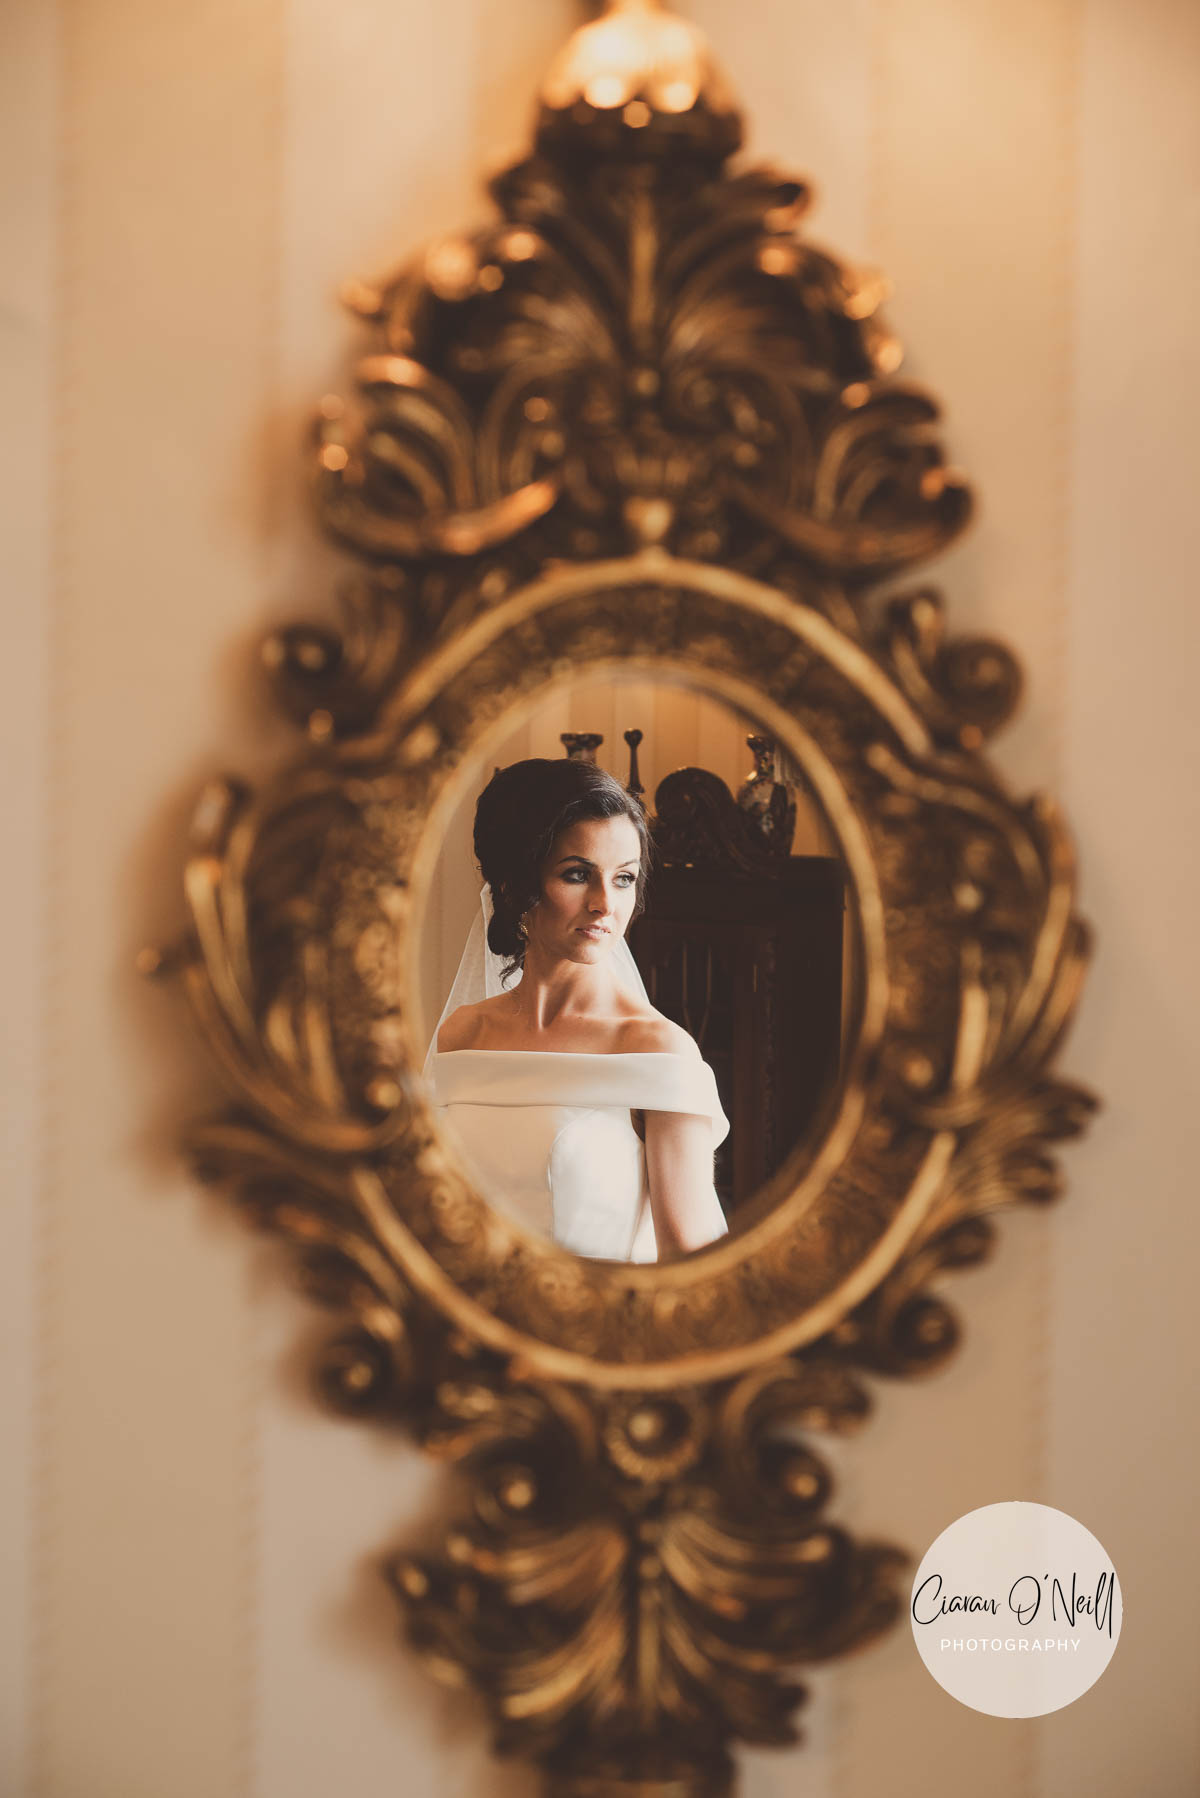 Reflection of bride in mirror